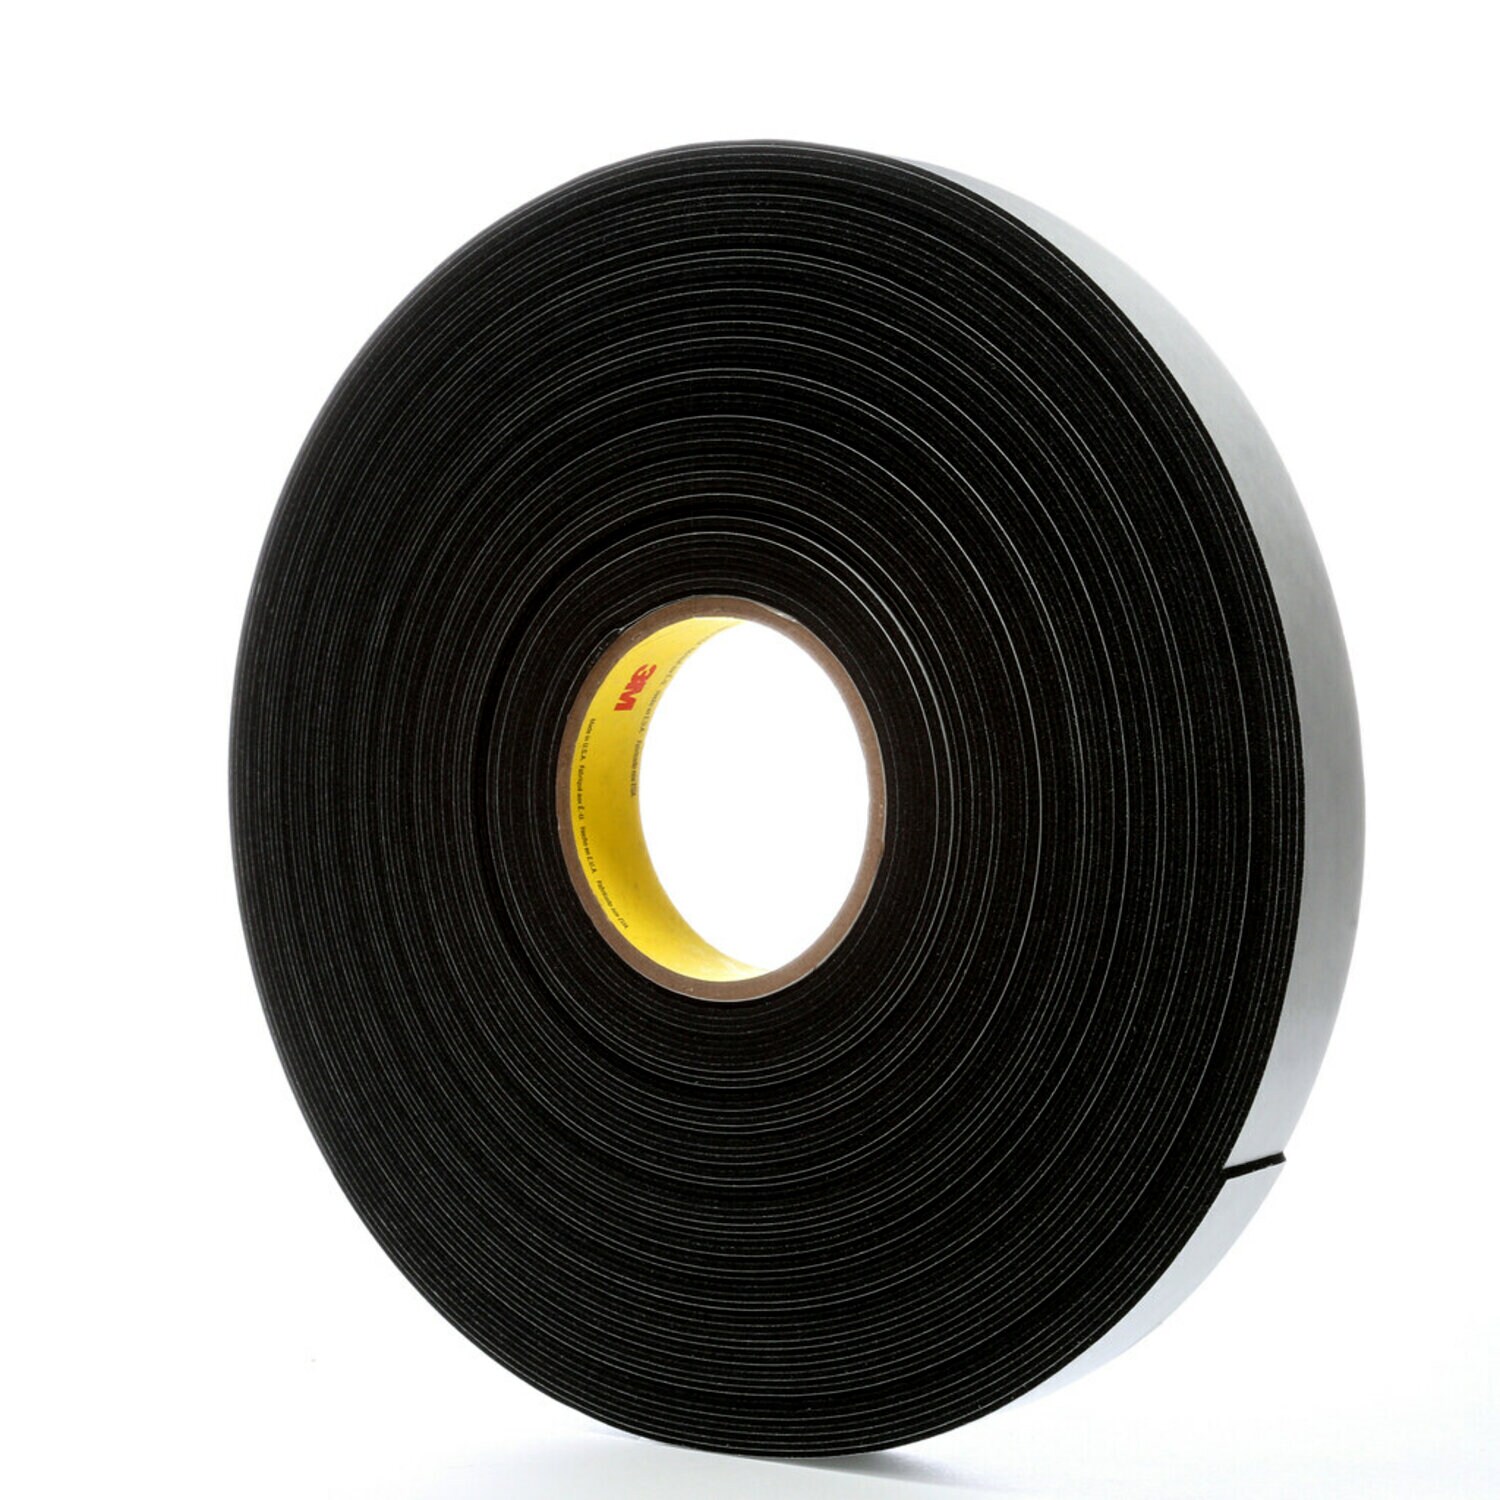 7010378908 - 3M Venture Tape Vinyl Foam Tape 1714, Gray, 1 1/2 in x 50 ft, 250 mil,
8 rolls per case